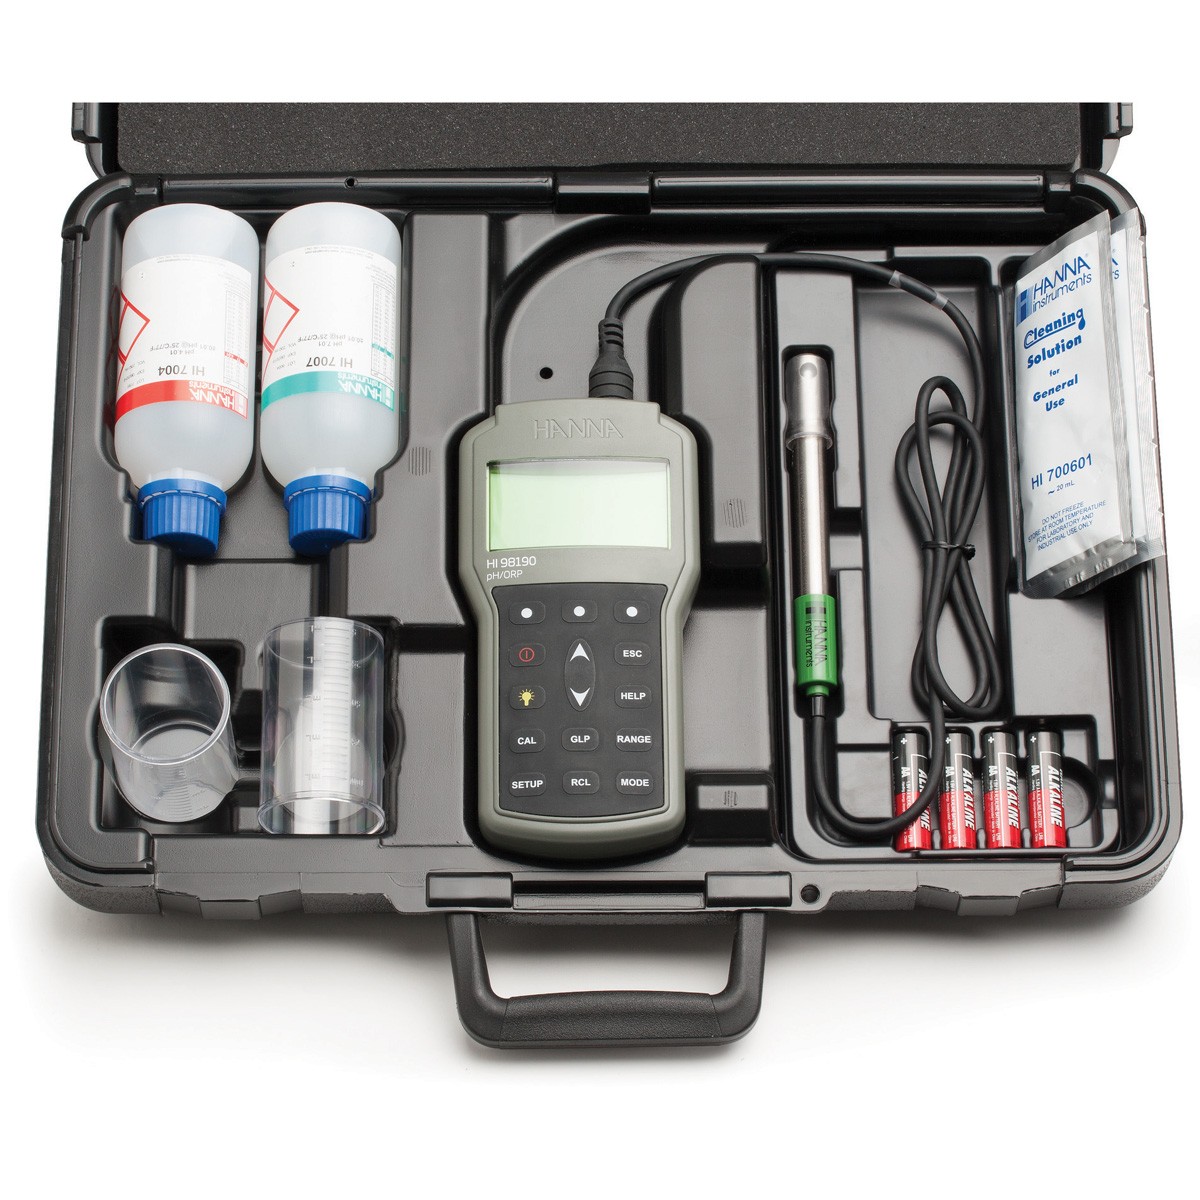 professional-waterproof-portable-ph-orp-meter-case-view-hi98190.jpg